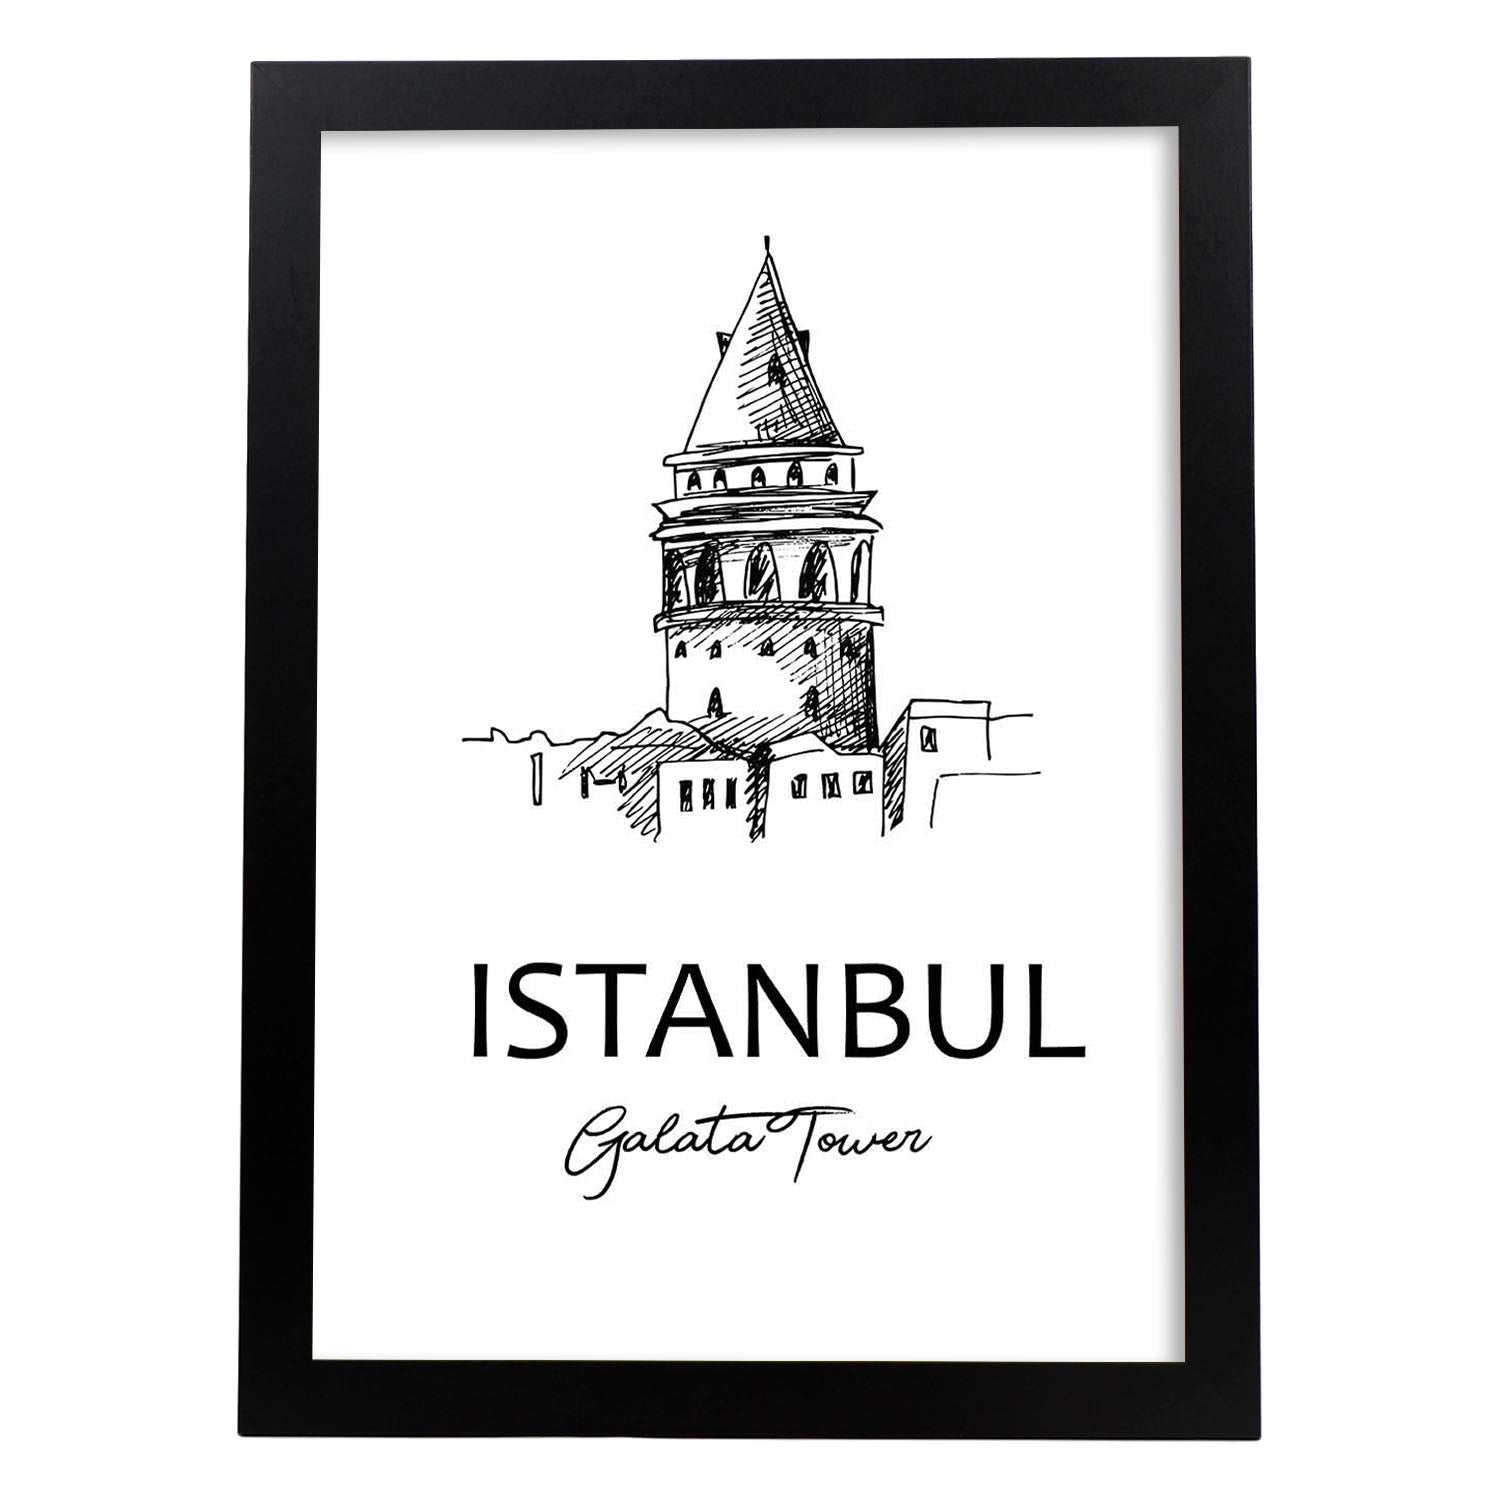 Poster de Estambul - Torre galata. Láminas con monumentos de ciudades.-Artwork-Nacnic-A3-Marco Negro-Nacnic Estudio SL